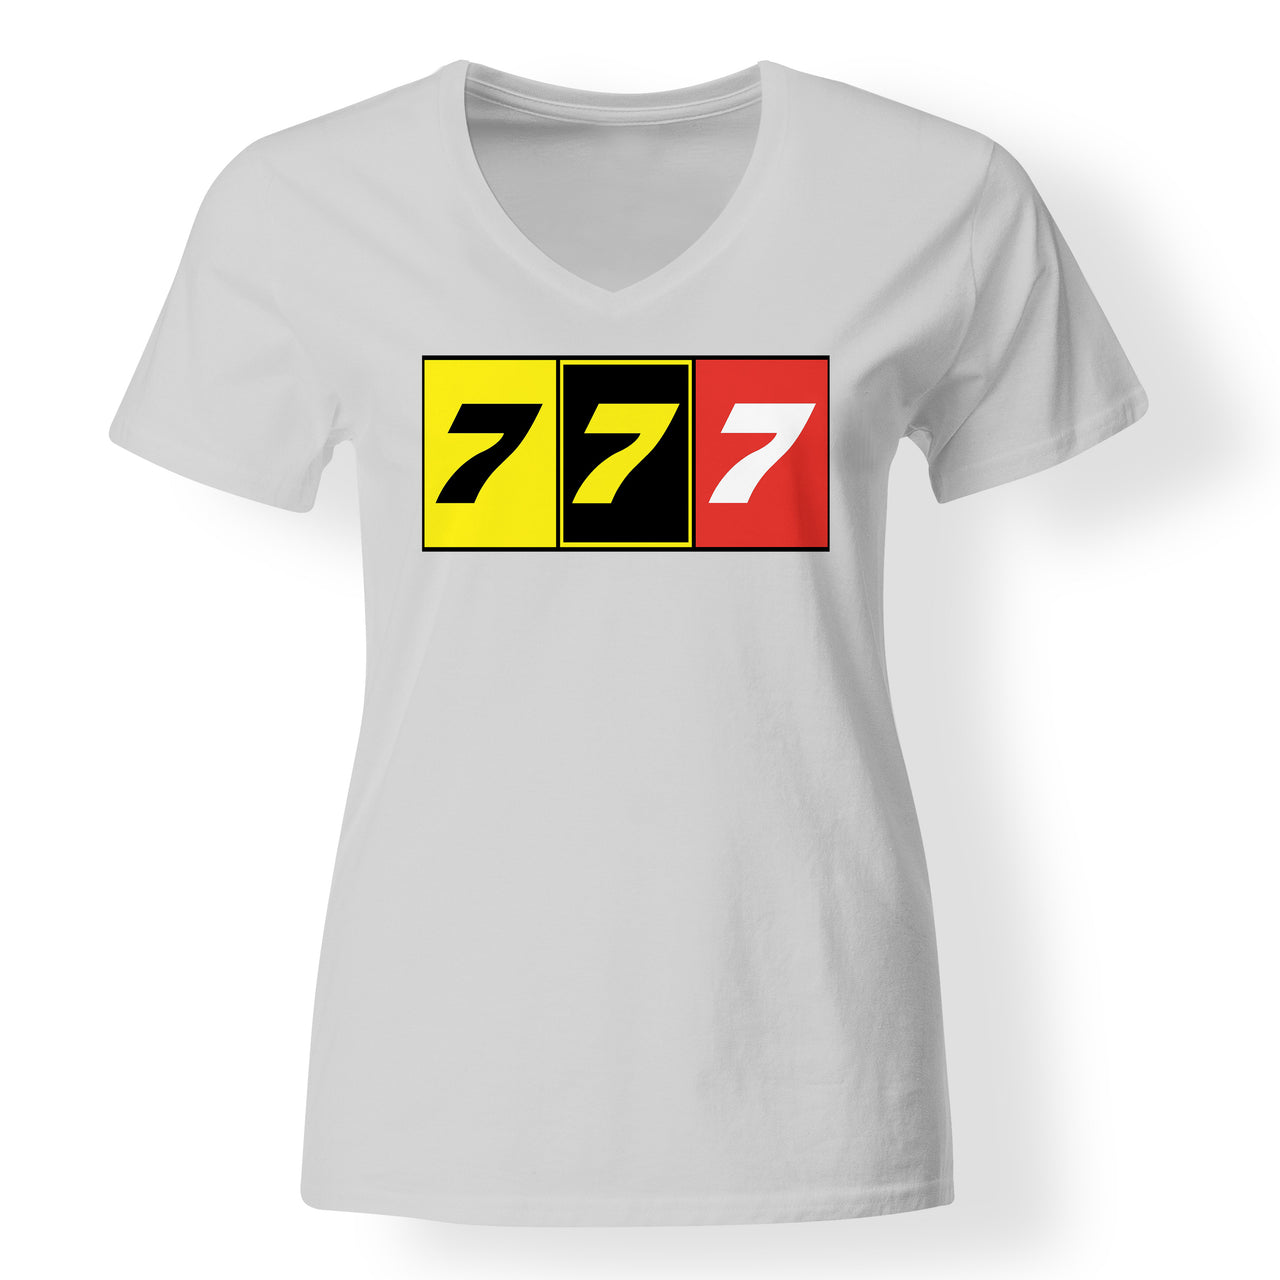 Flat Colourful 777 Designed V-Neck T-Shirts